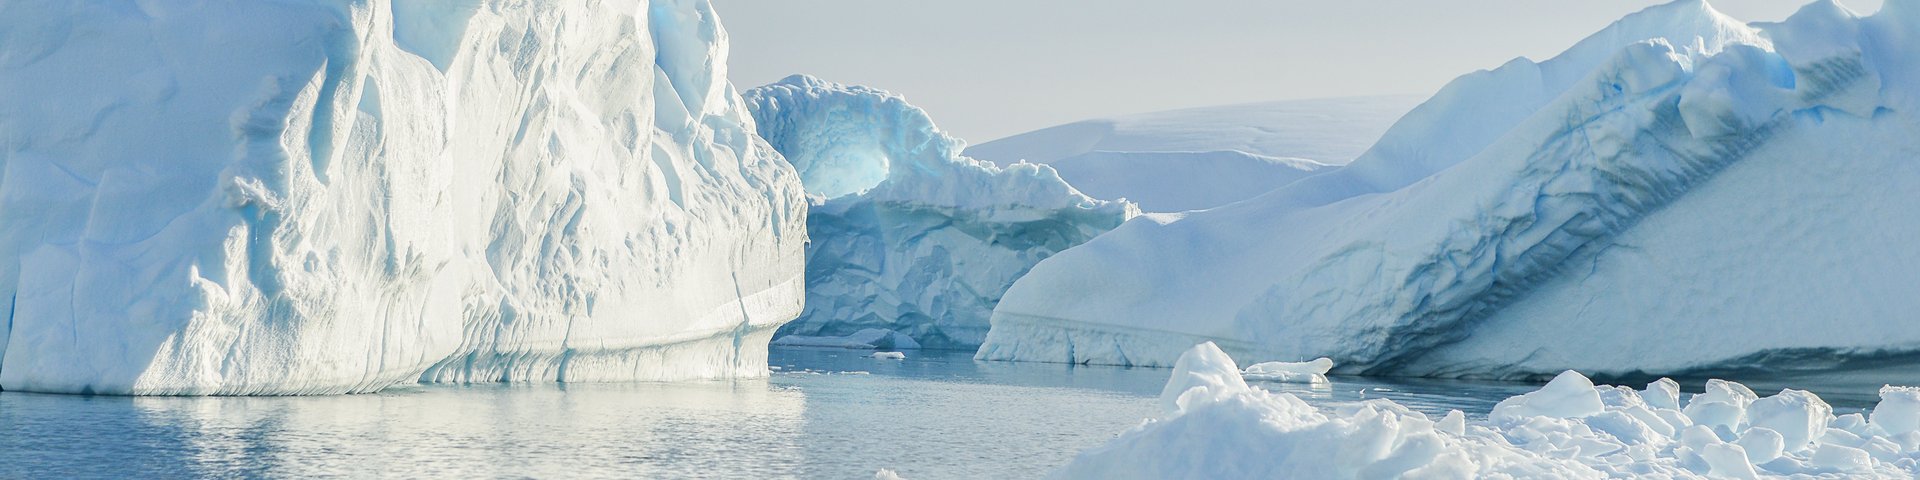 Rossmeer - Antarktis